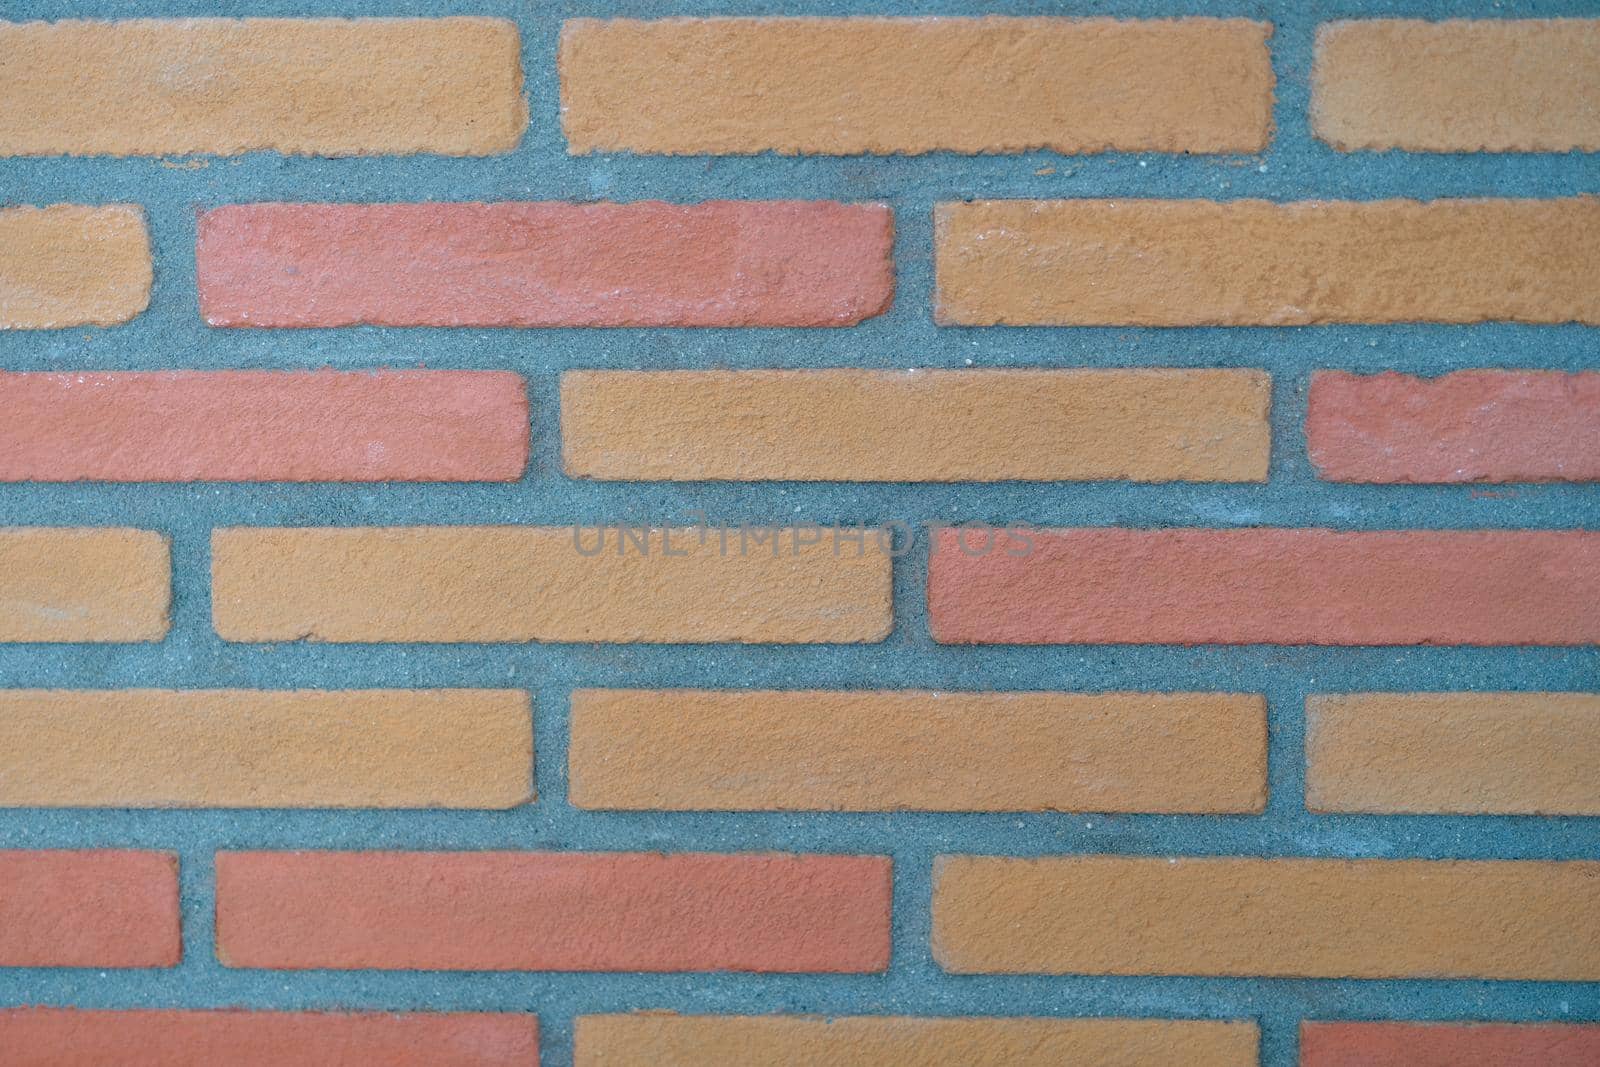 Stone wall made of rectangular bricks closeup. Building texture background